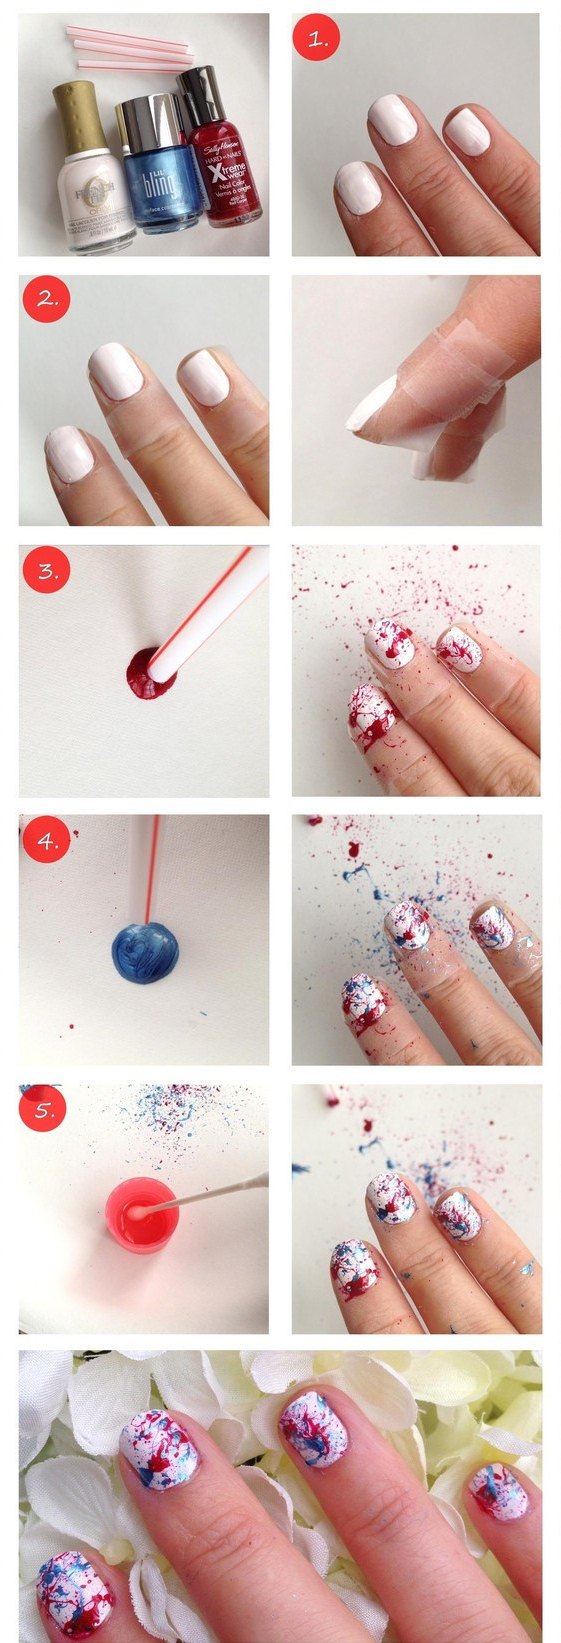 Splatter-Paint-Nails